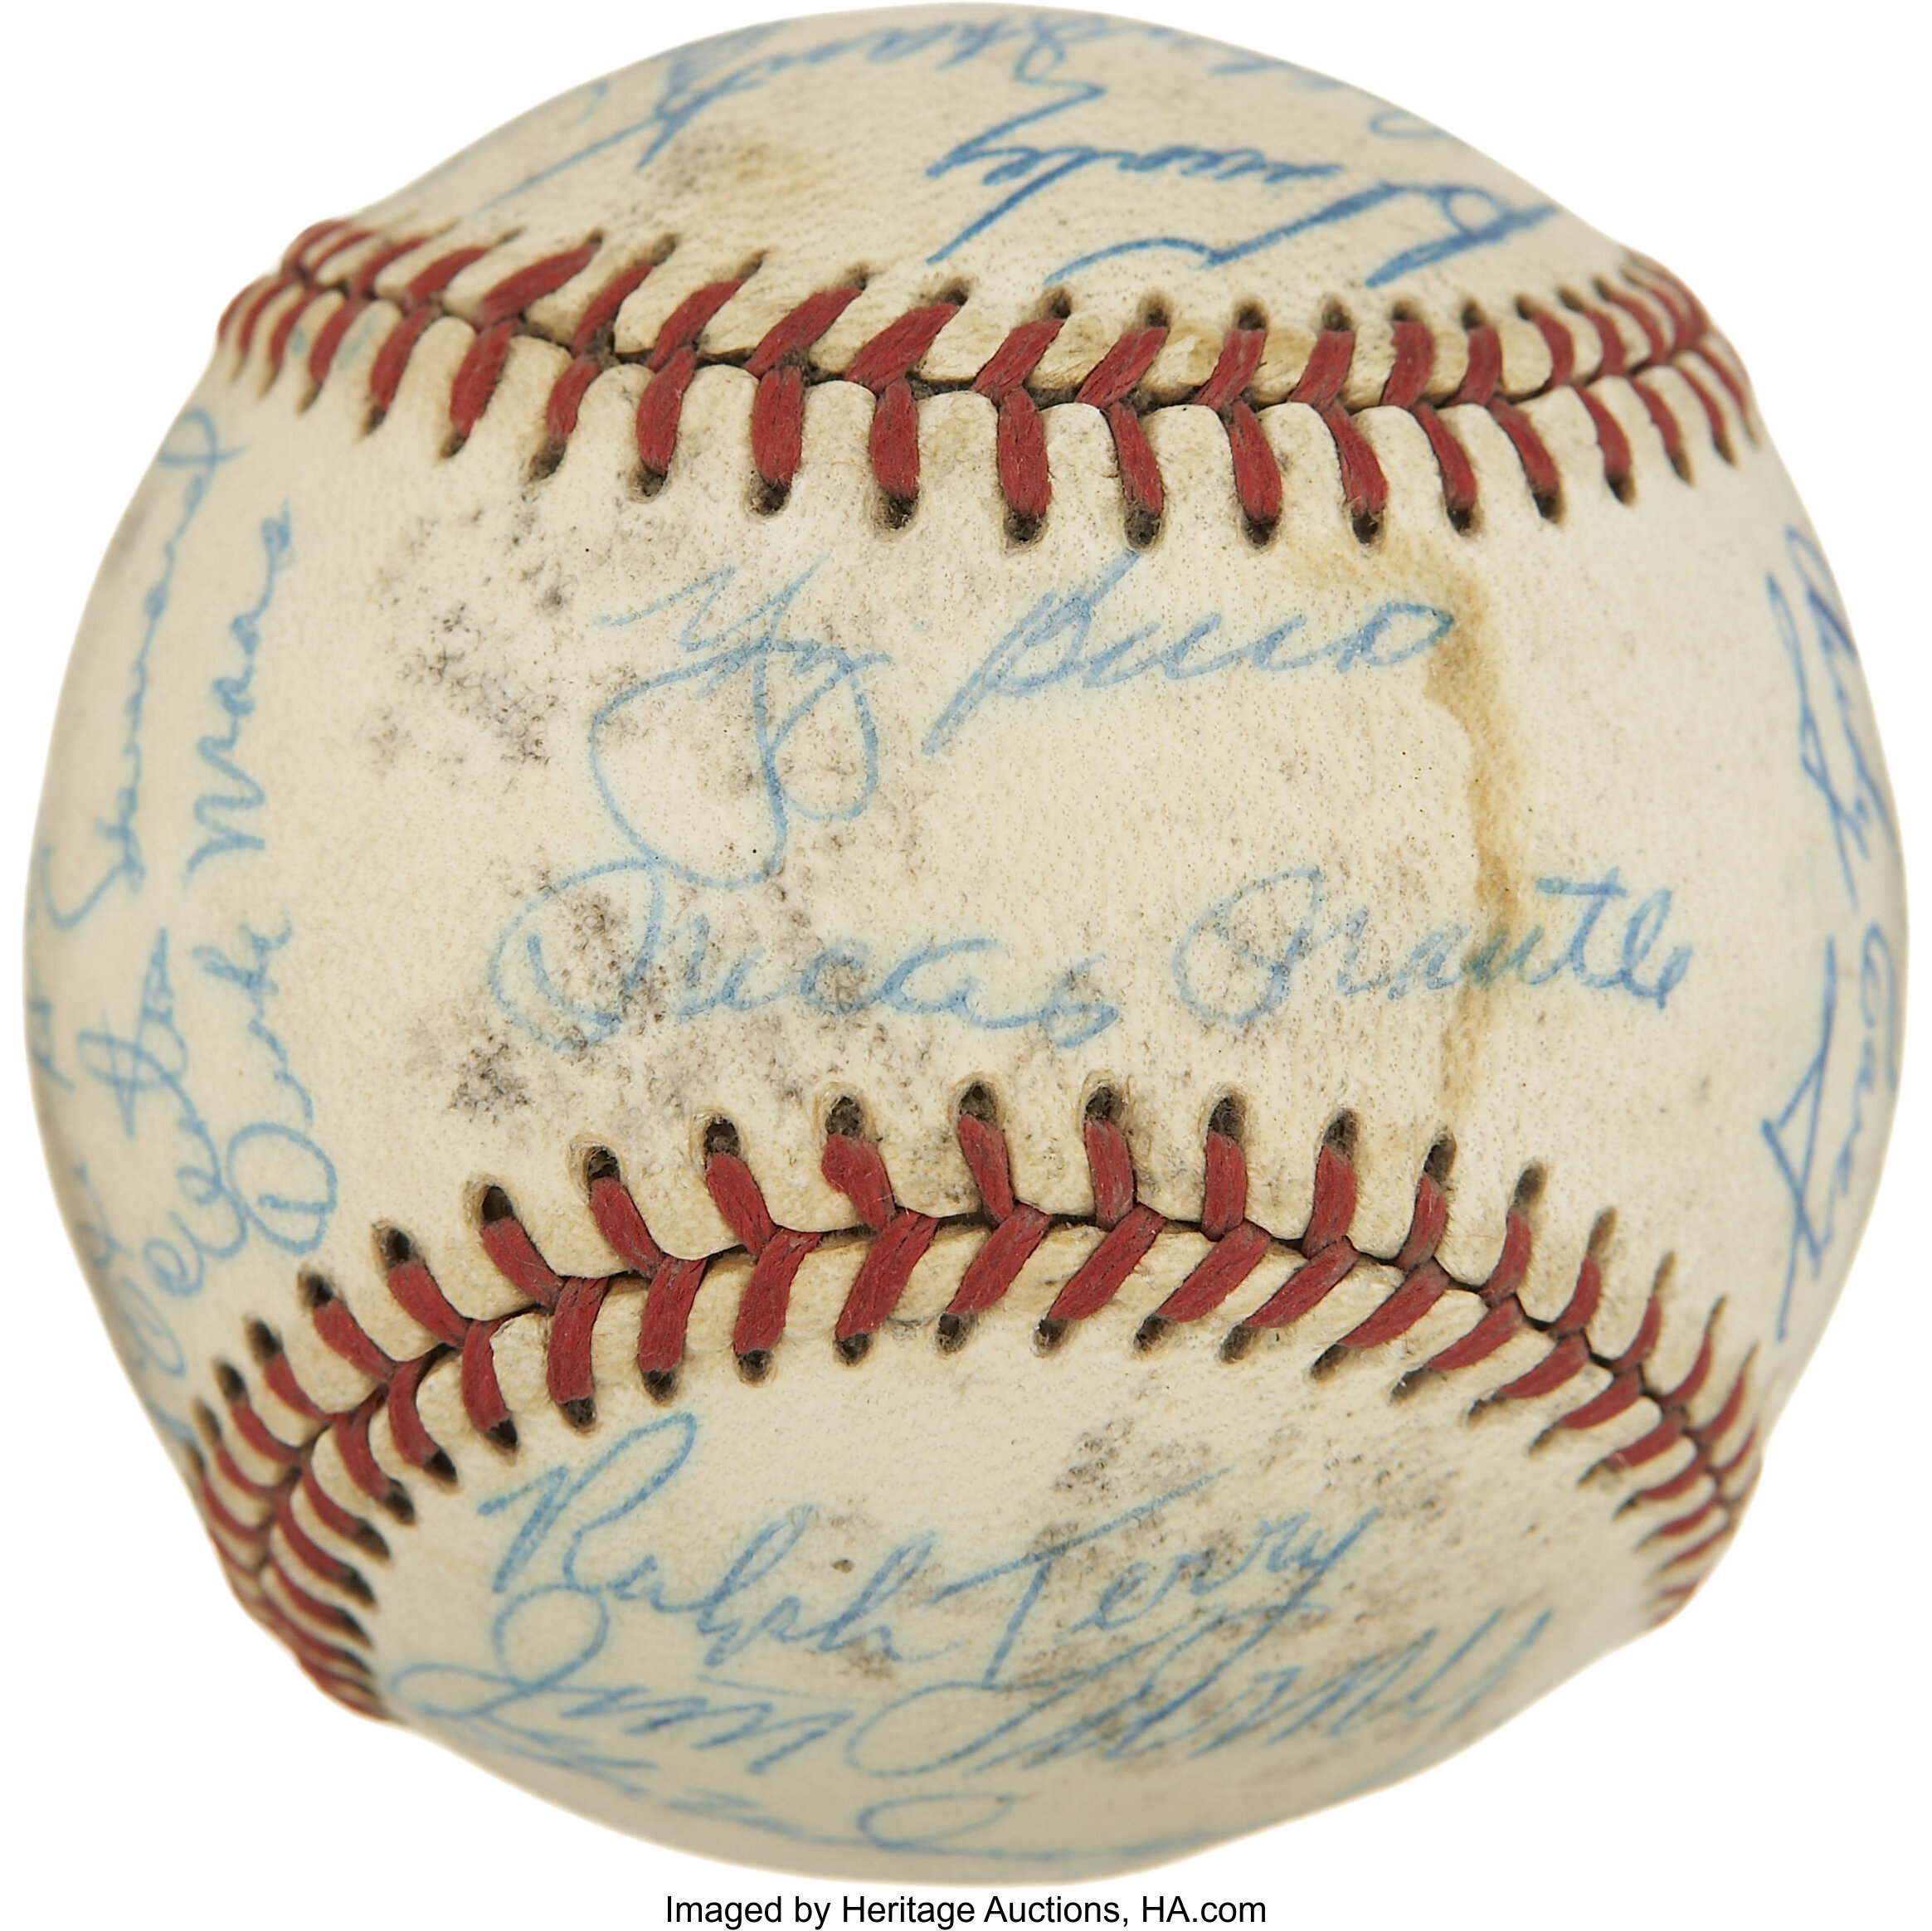 Mickey Mantle, Yogi Berra & Whitey Ford Signed OAL Baseball with